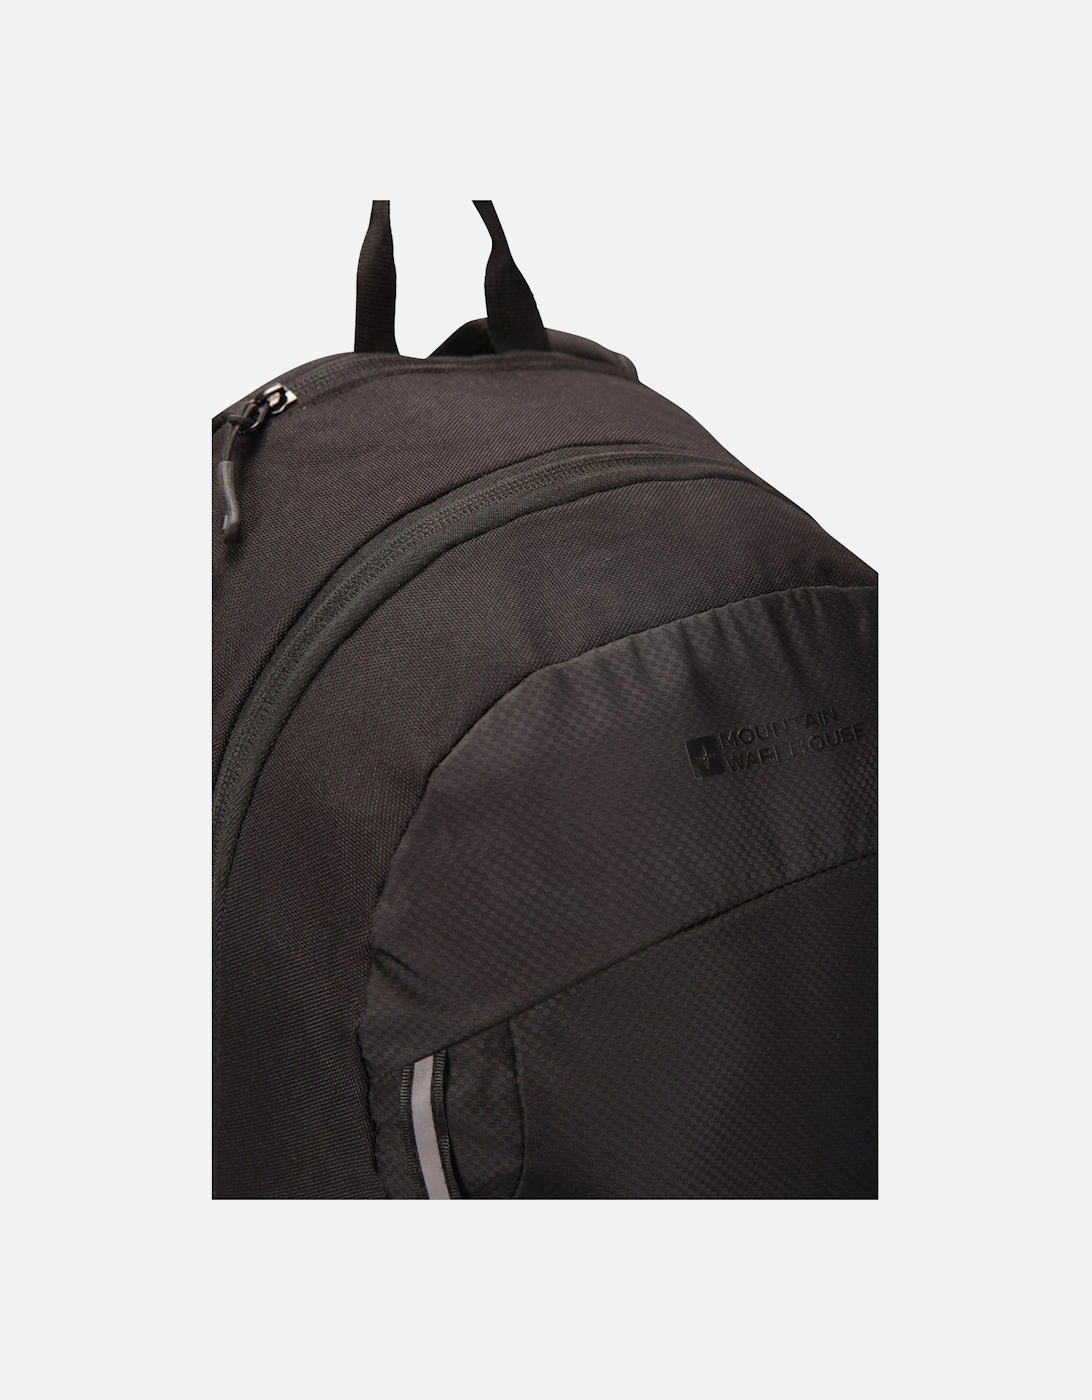 Onyx Lightweight 15L Backpack